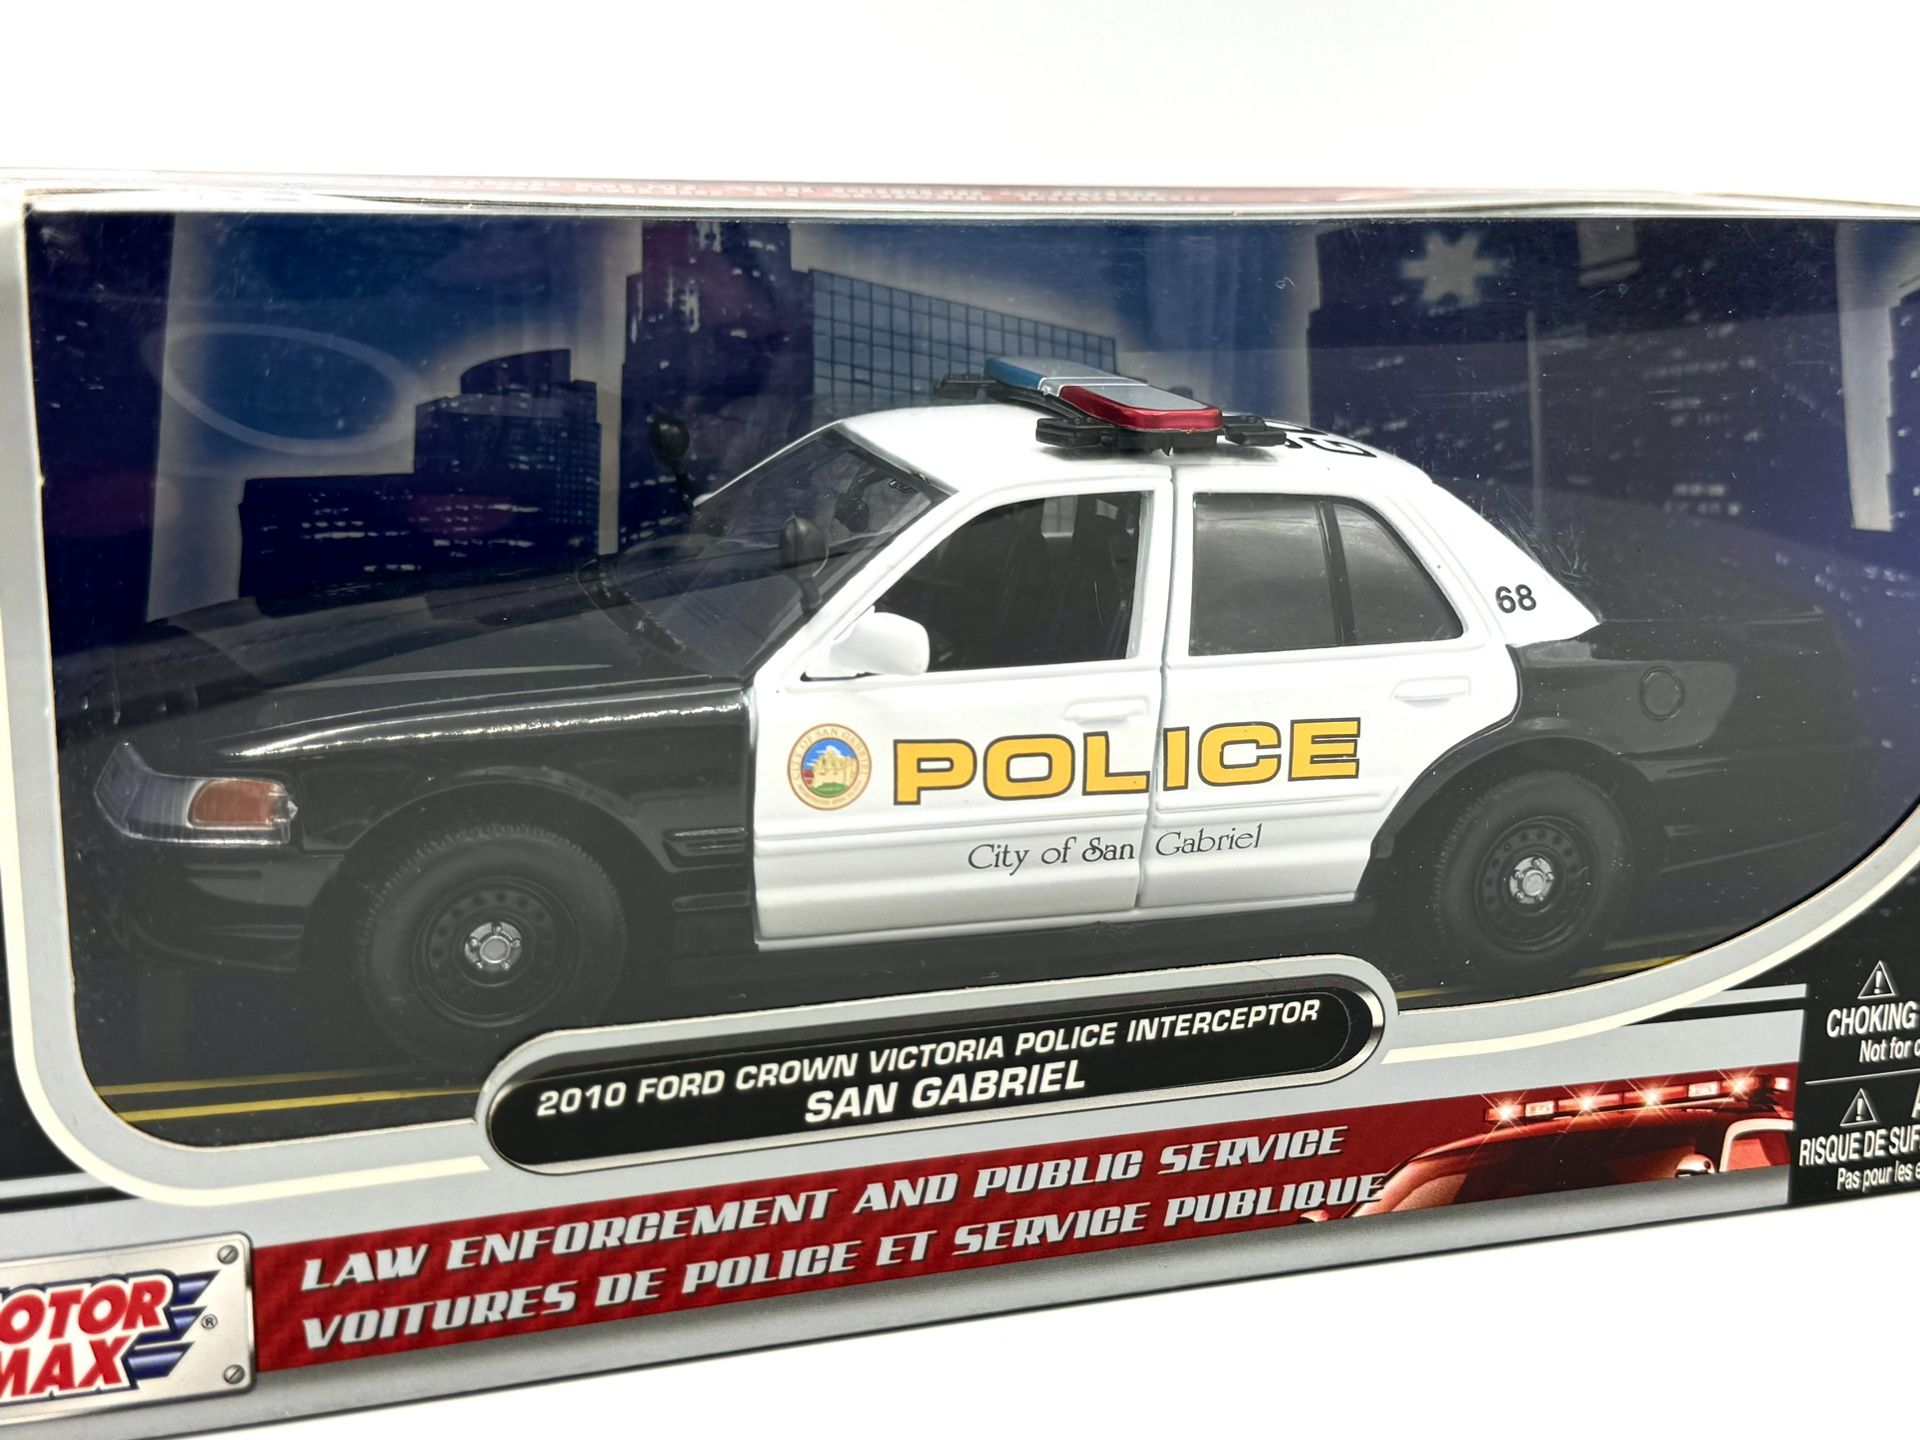 Motor Max 1:24 Scale Diecast Model Car - 2010 FORD CROWN VICTORIA POLICE INTERCEPTOR (SAN GABRIEL)